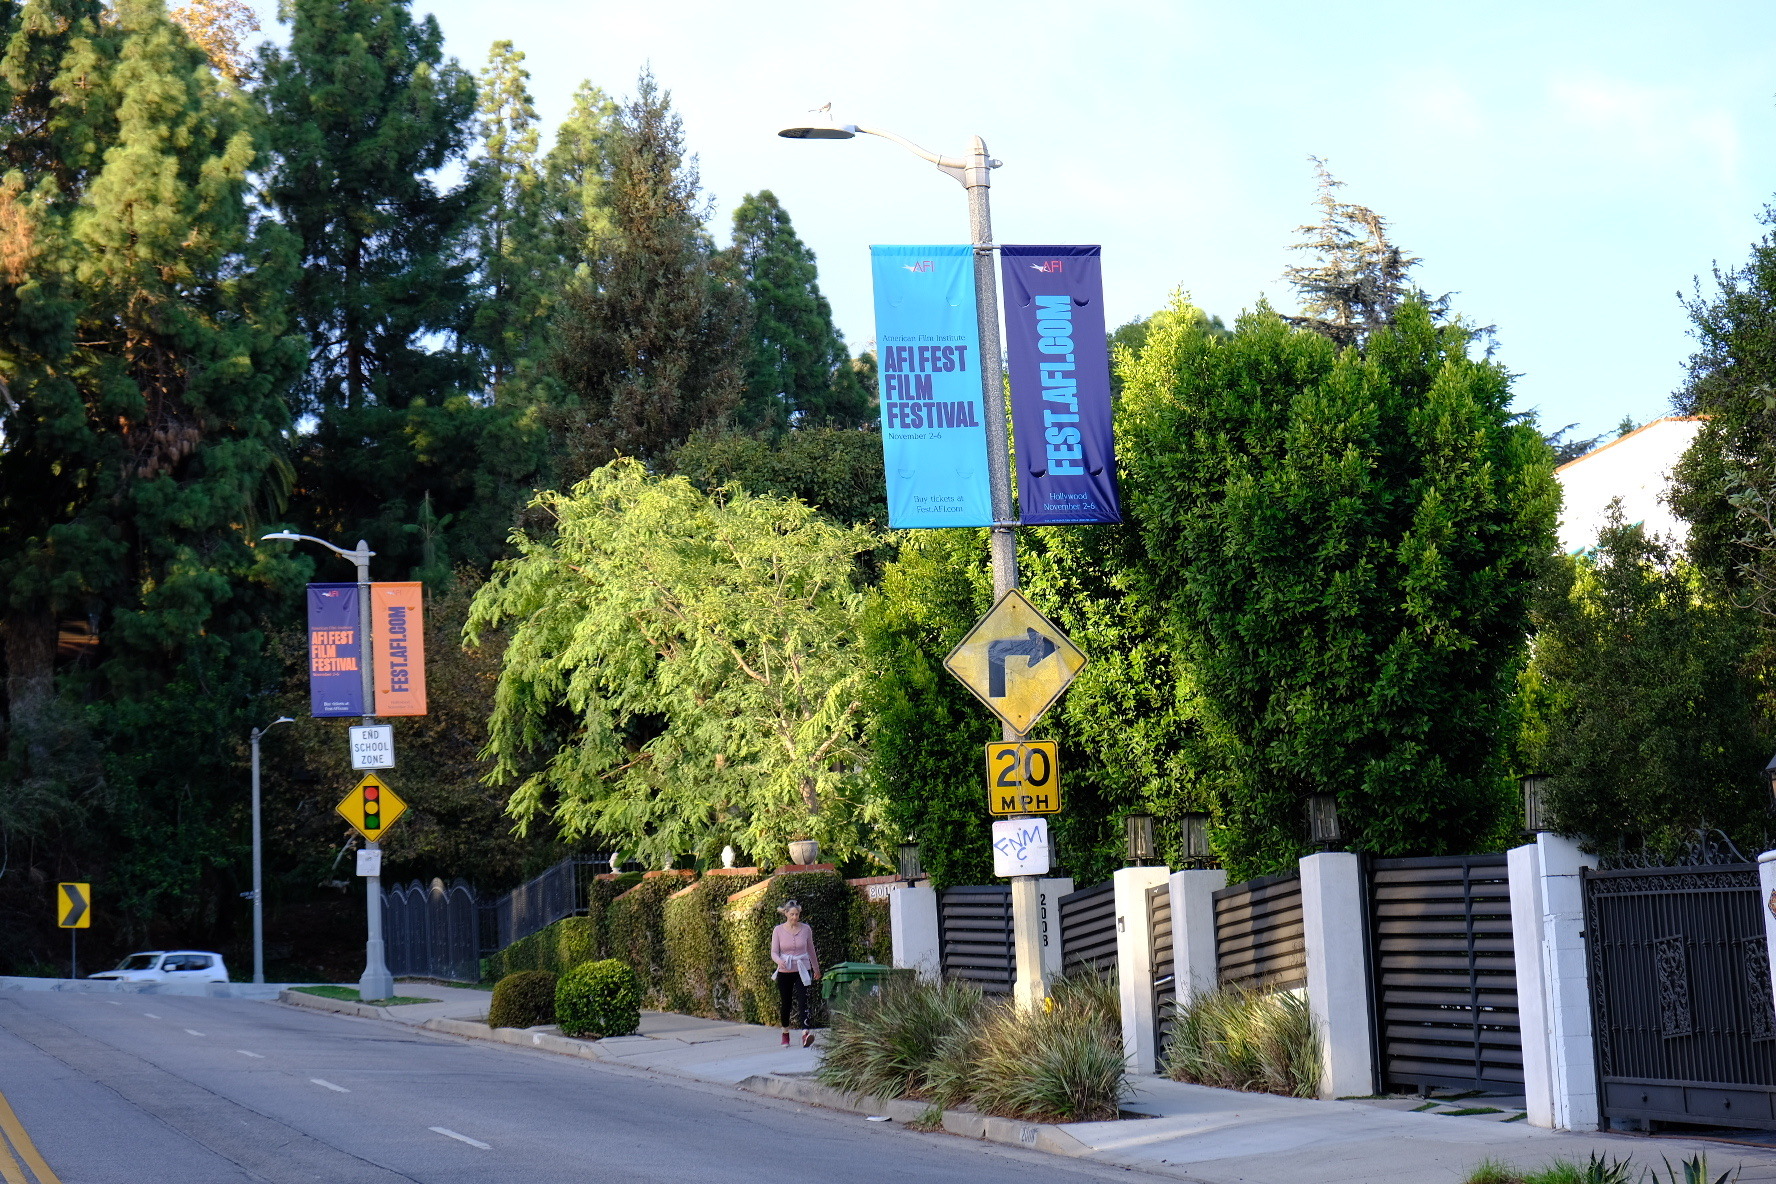 AFI Film Fest street pole banners